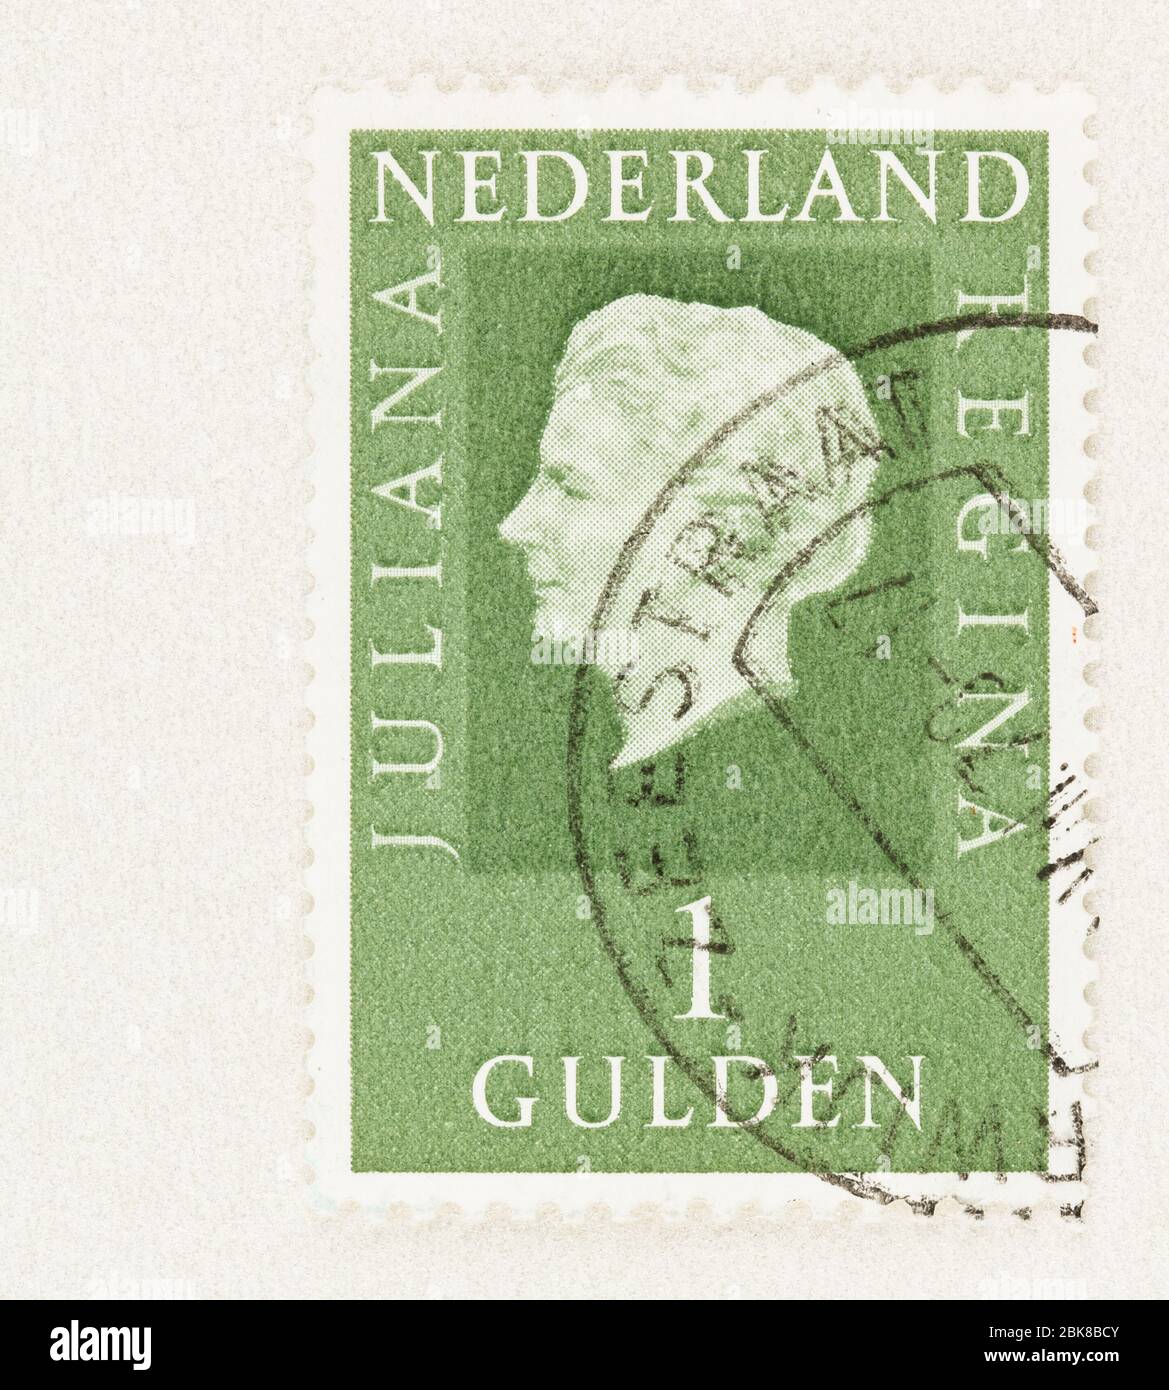 SEATTLE WASHINGTON - May 1, 2020: 1981 Green Regina stamp of Netherlands featuring Queen Juliana. Scott # 469 Stock Photo